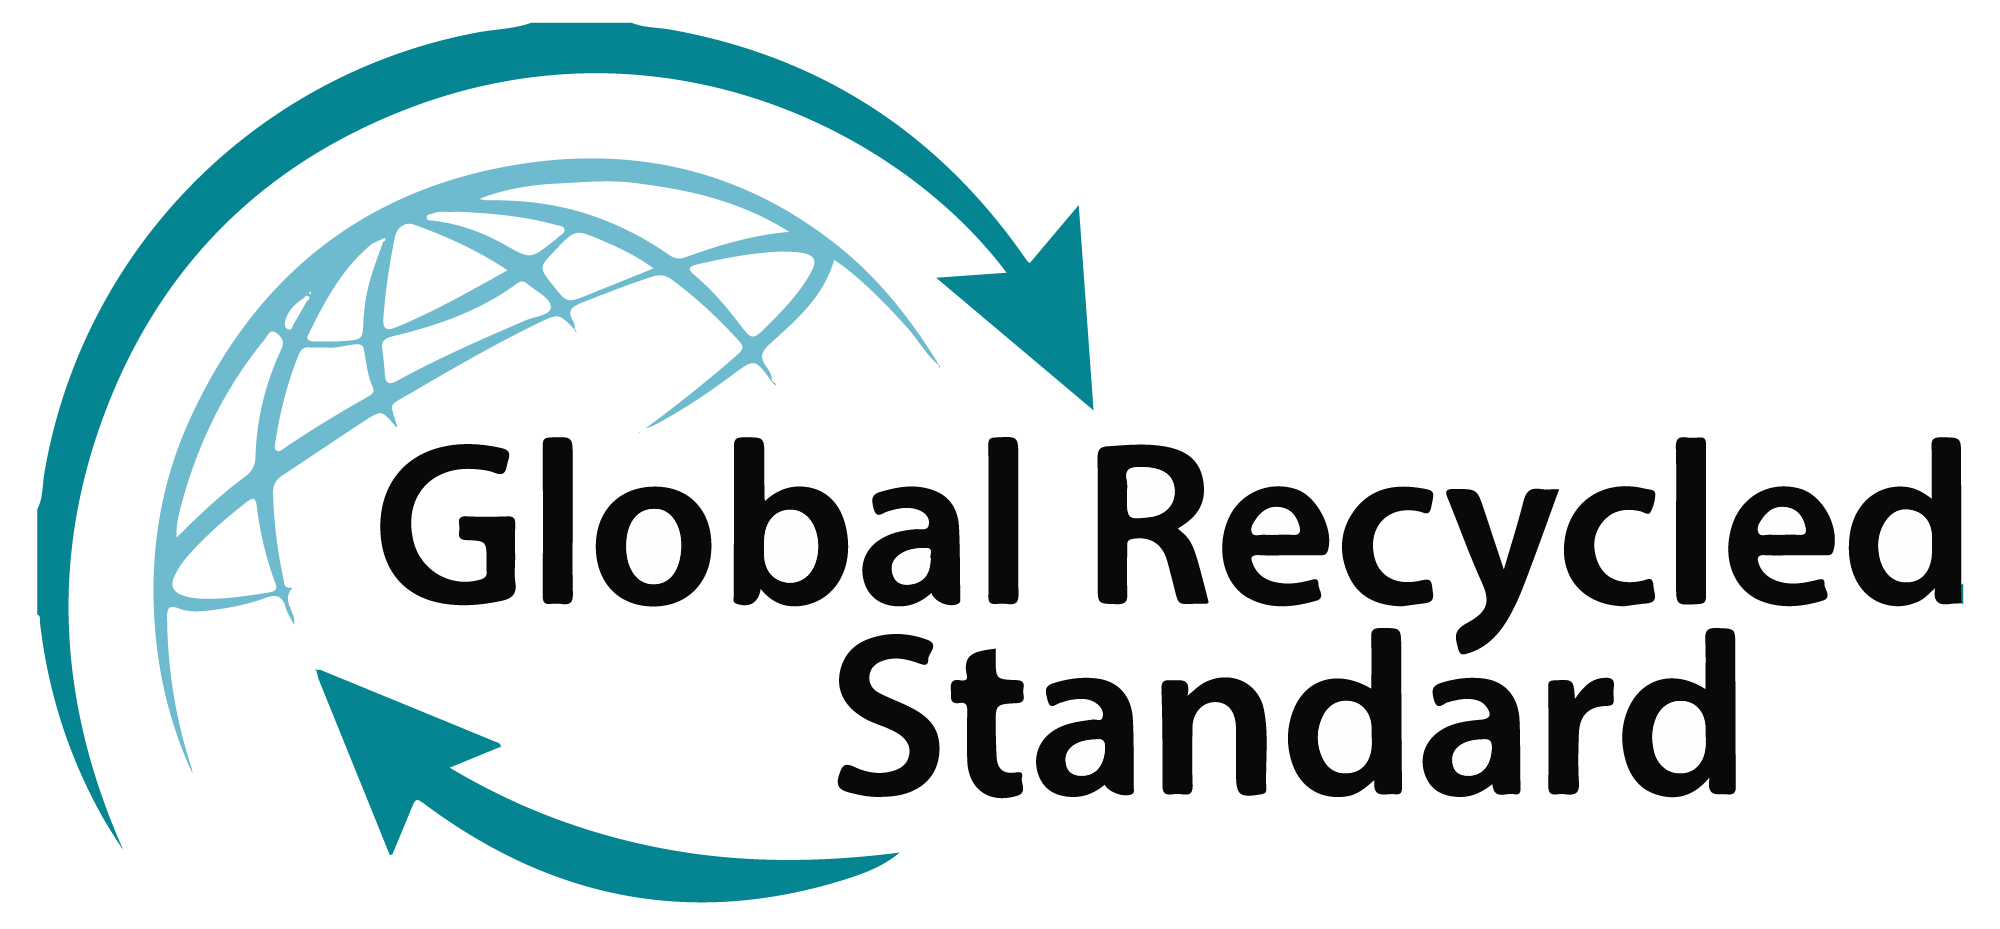 Global recycled standard logo